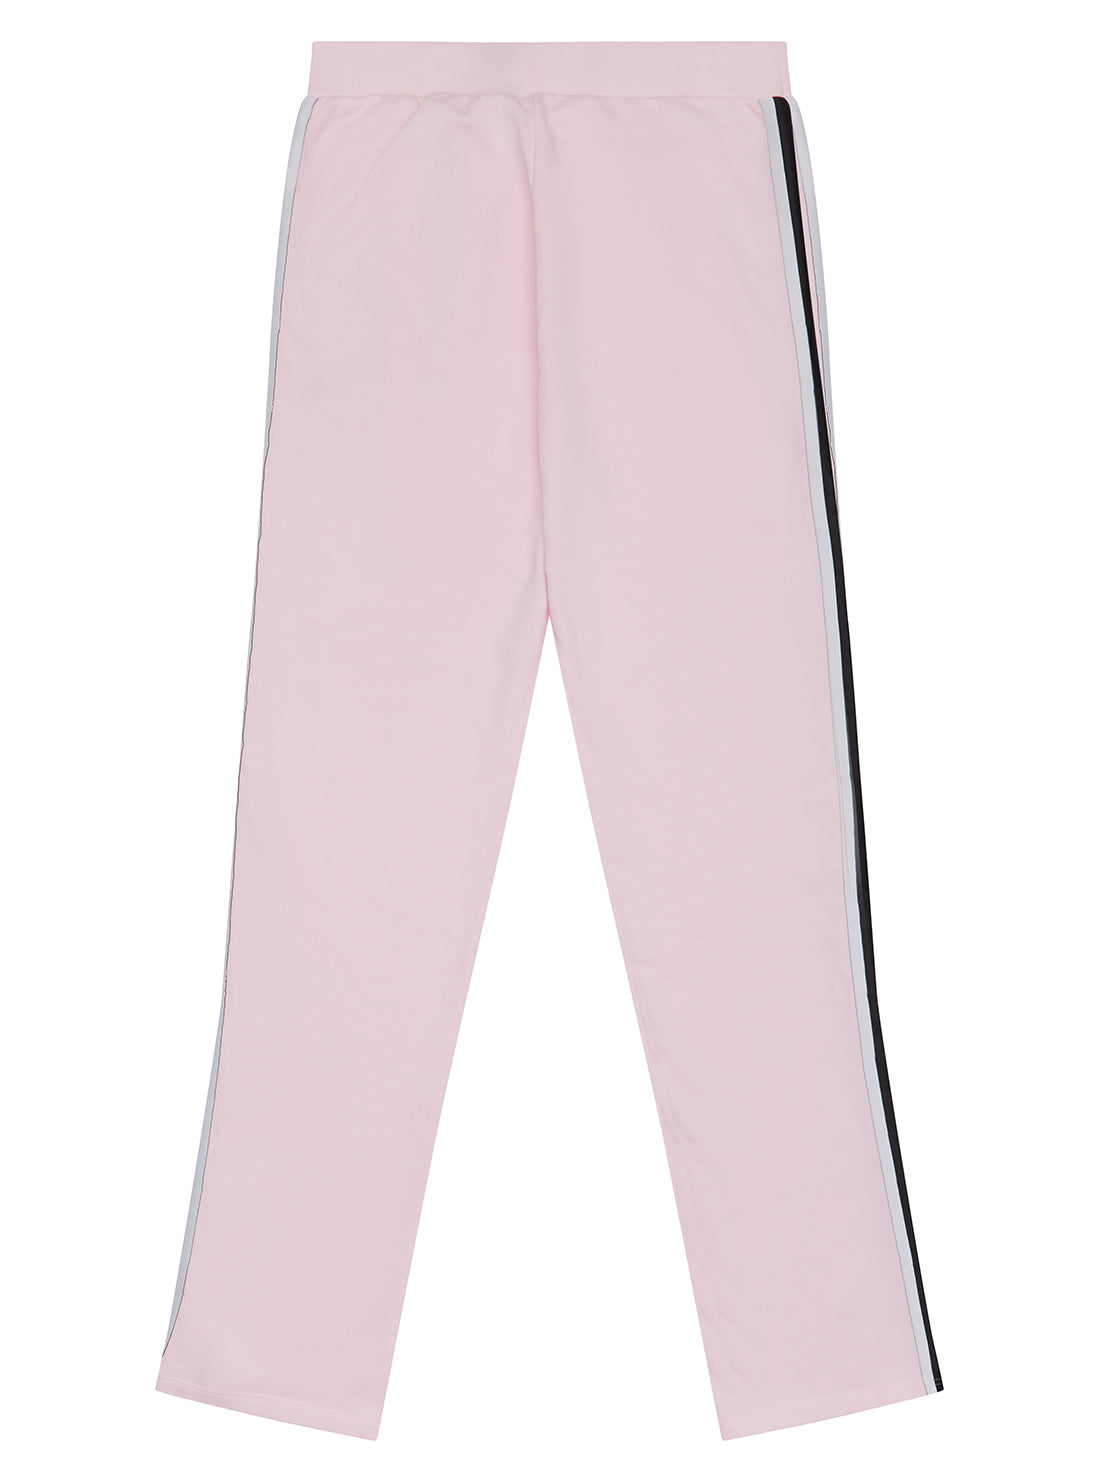 GUESS Pink Active Pants (7-16) back view